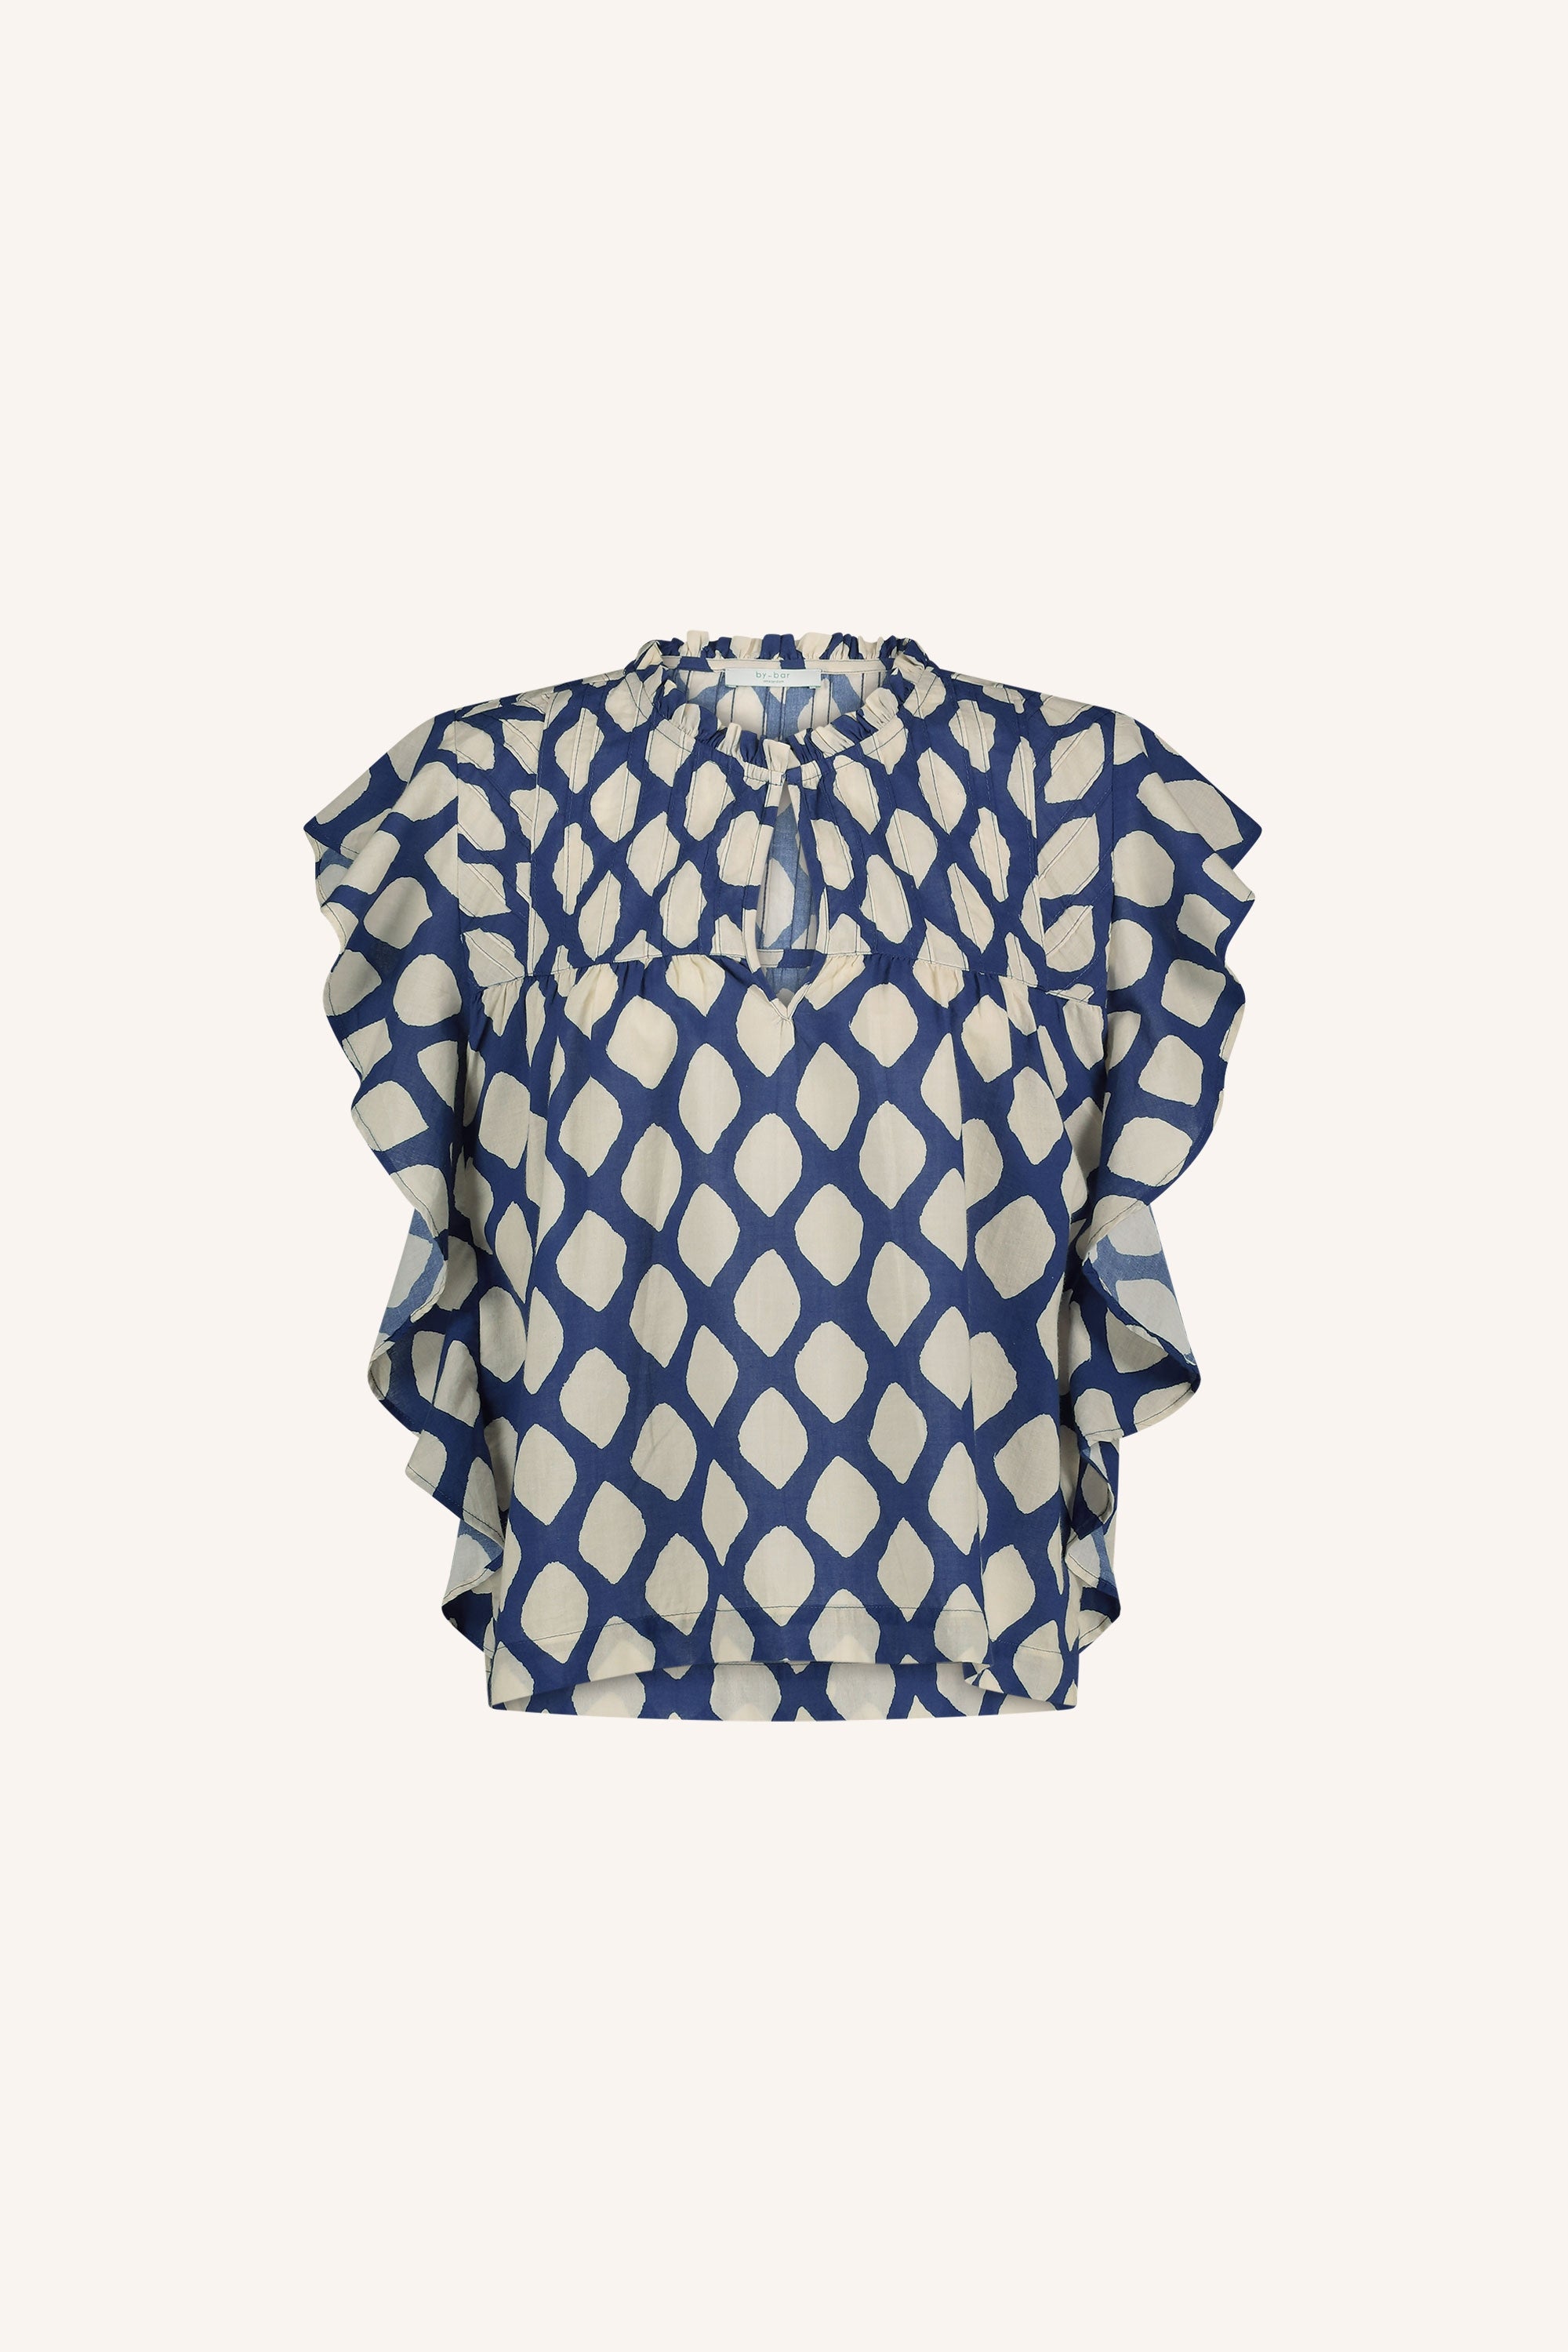 danee balu blouse | balu print